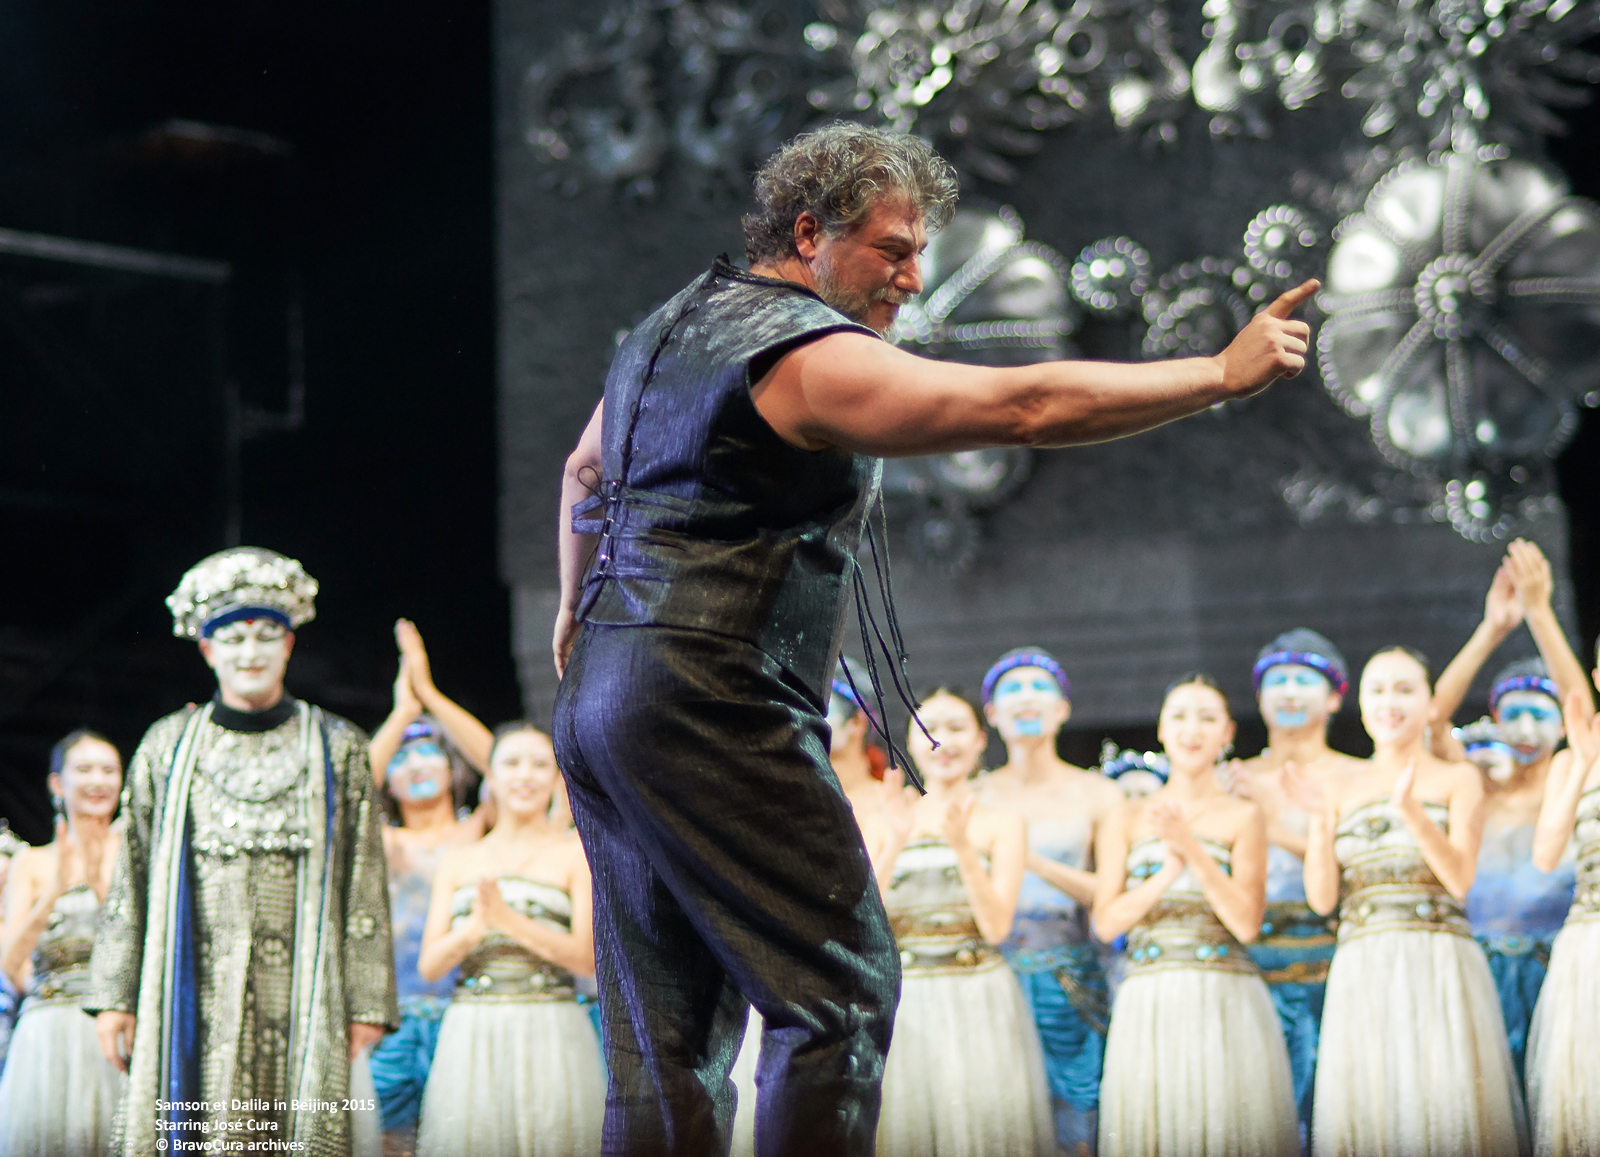 Jos Cura as Samson in the 2015 Beijing Opera production of Samson et Dalila.